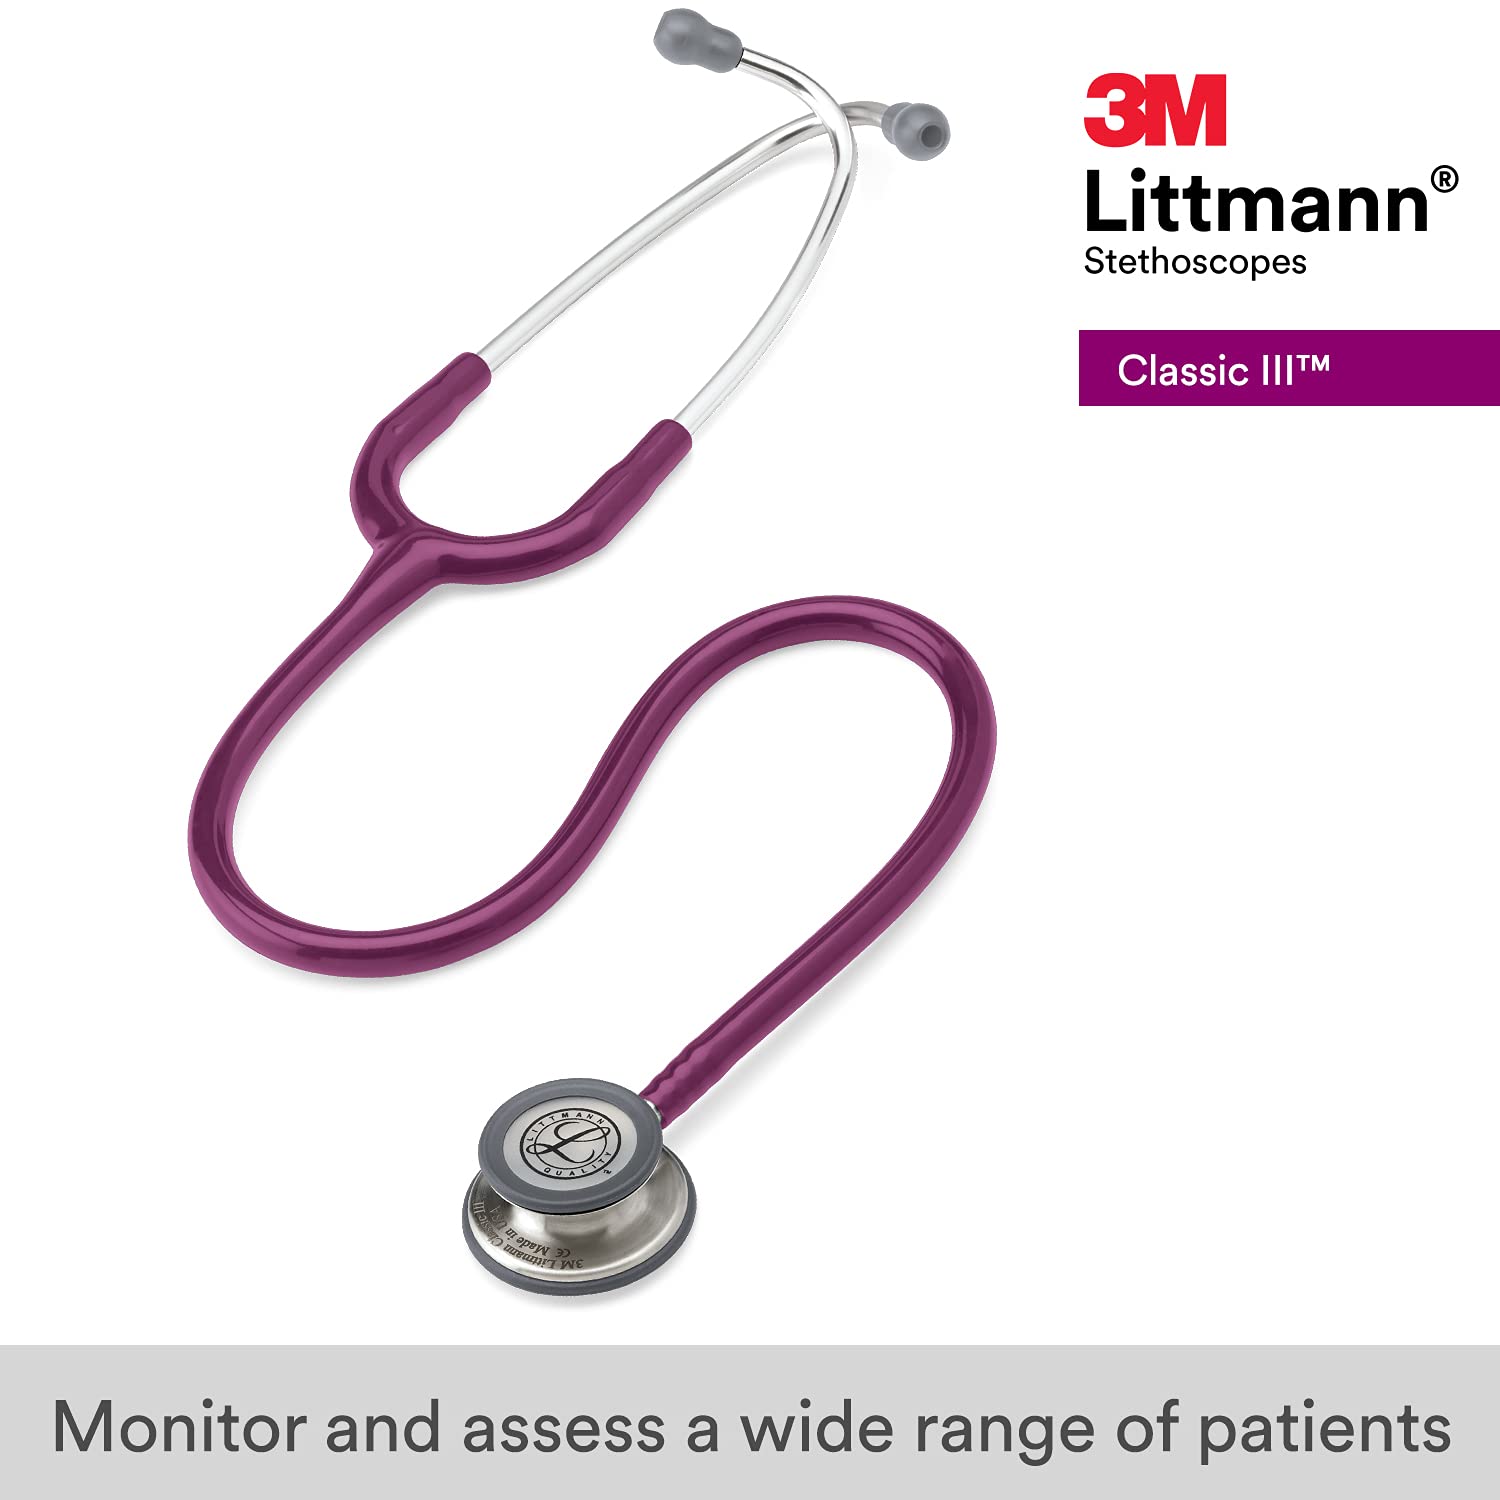 3M Littmann Classic III Monitoring Stethoscope - 5831 - Plum Color Tube with Standard Chest Piece 5831 - Littmann Plum Edition Stethoscope in Pakistan